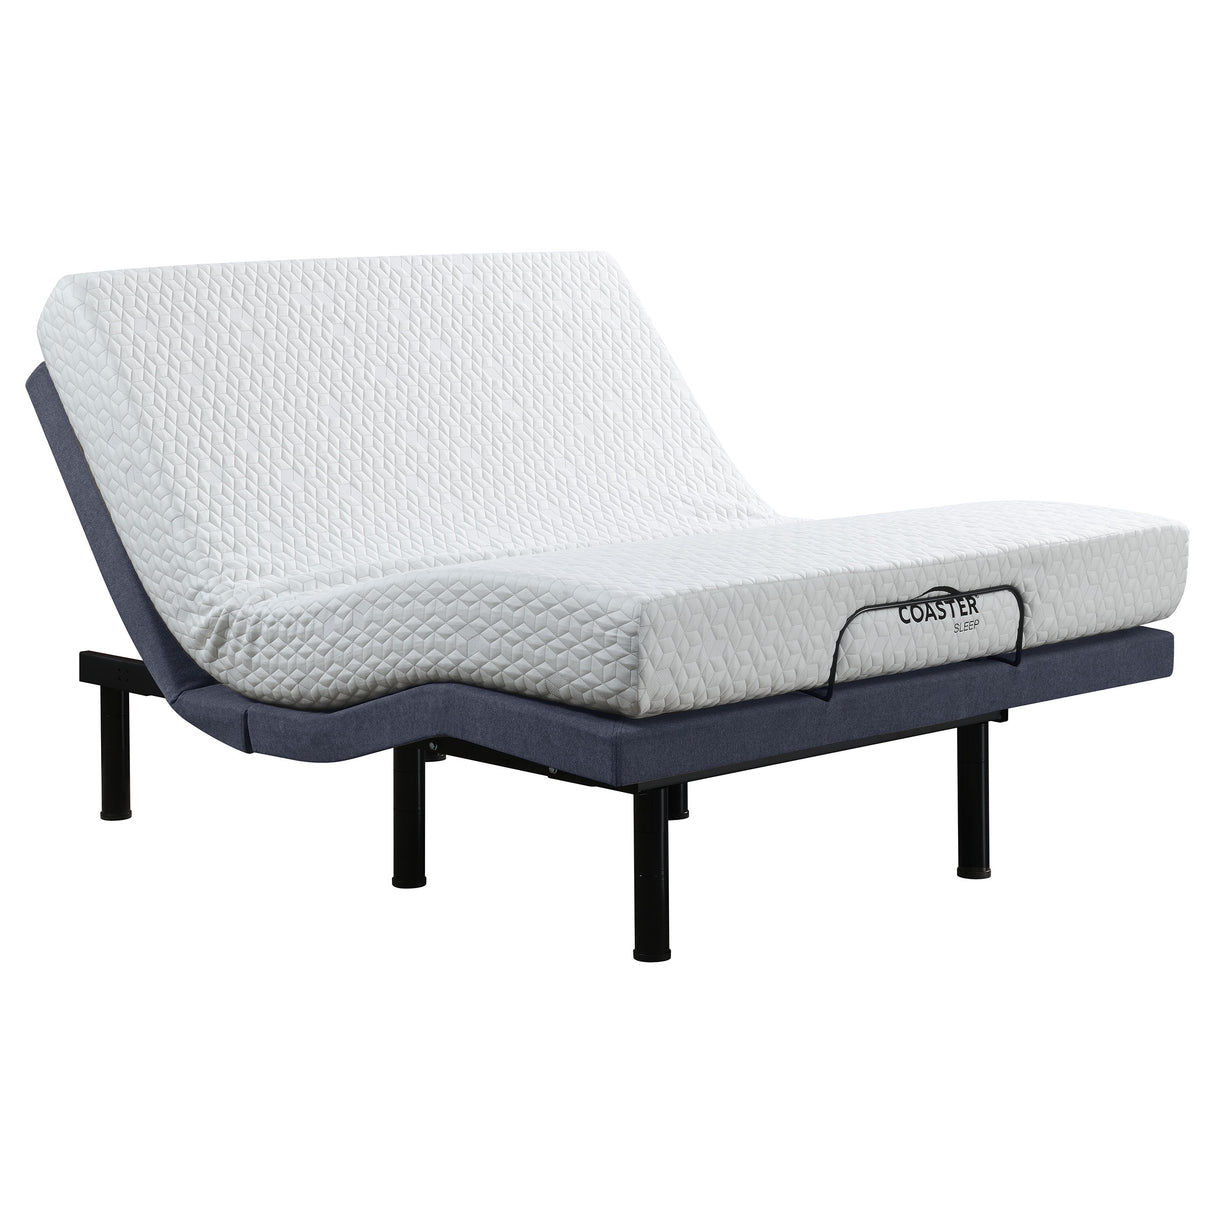 Queen Adjustable Bed Base - Clara Queen Adjustable Bed Base Grey and Black